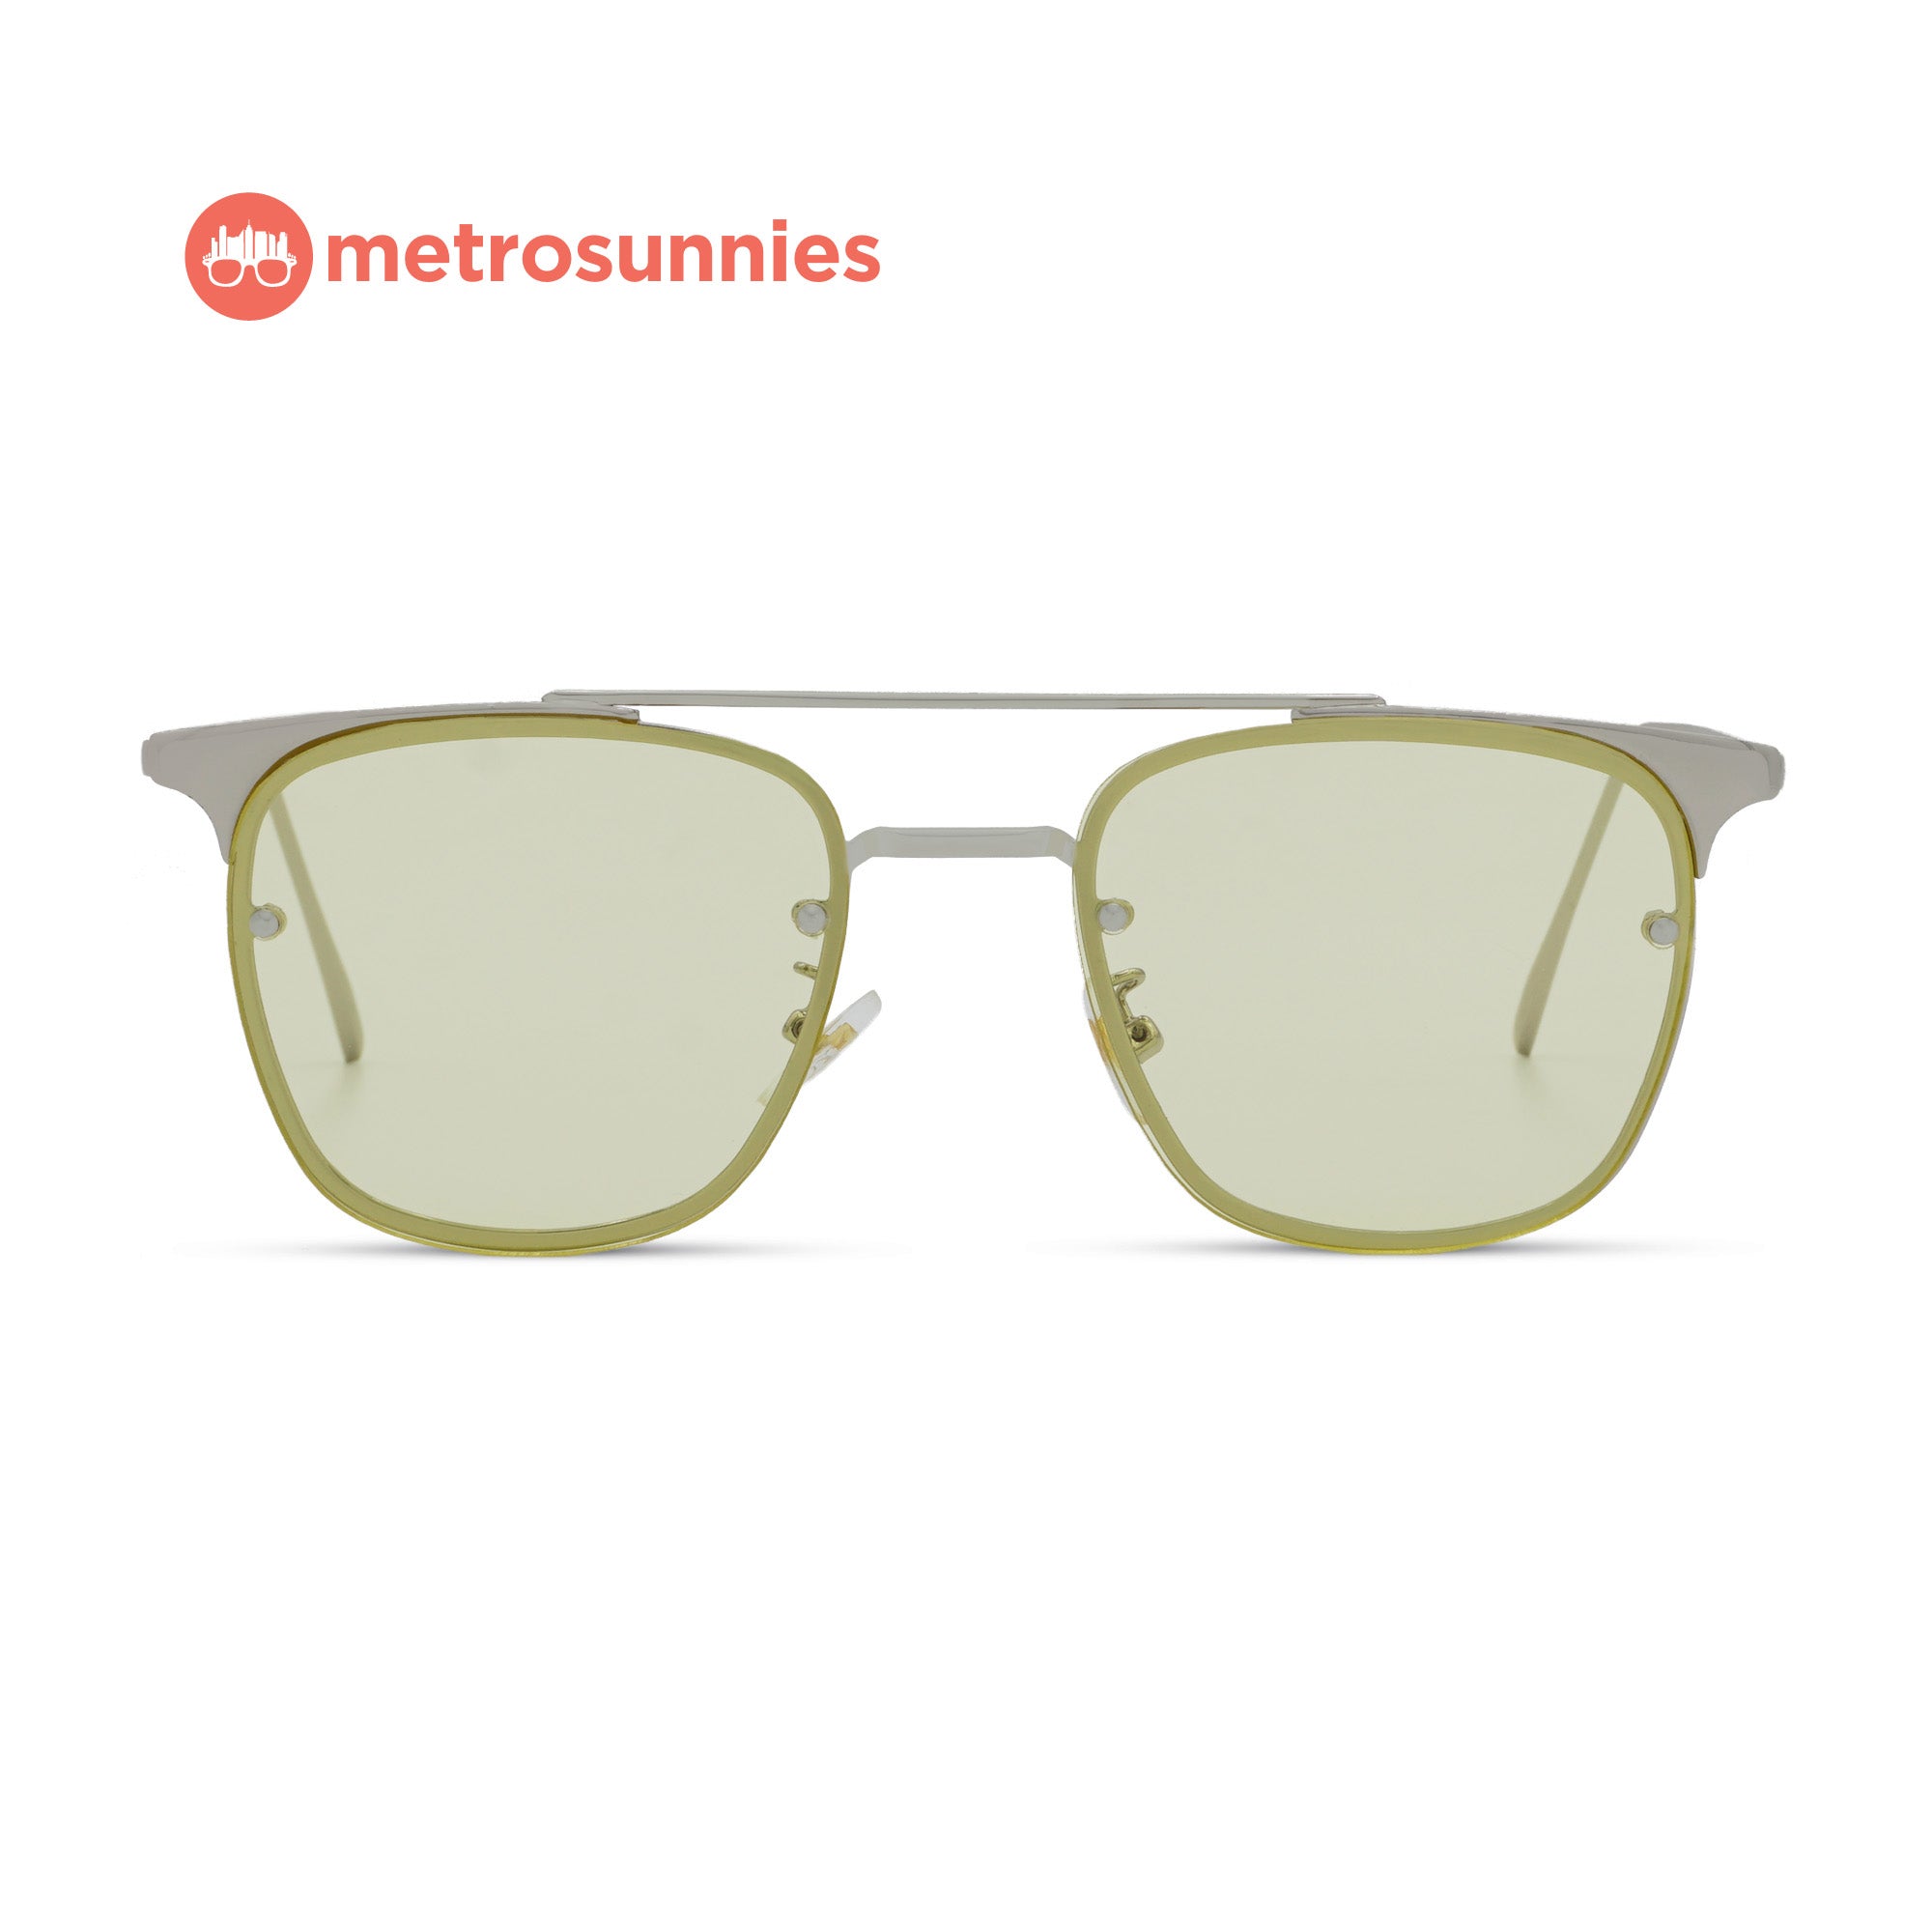 MetroSunnies Spencer Sunnies (Lime) / Sunglasses with UV400 Protection / Fashion Eyewear Unisex